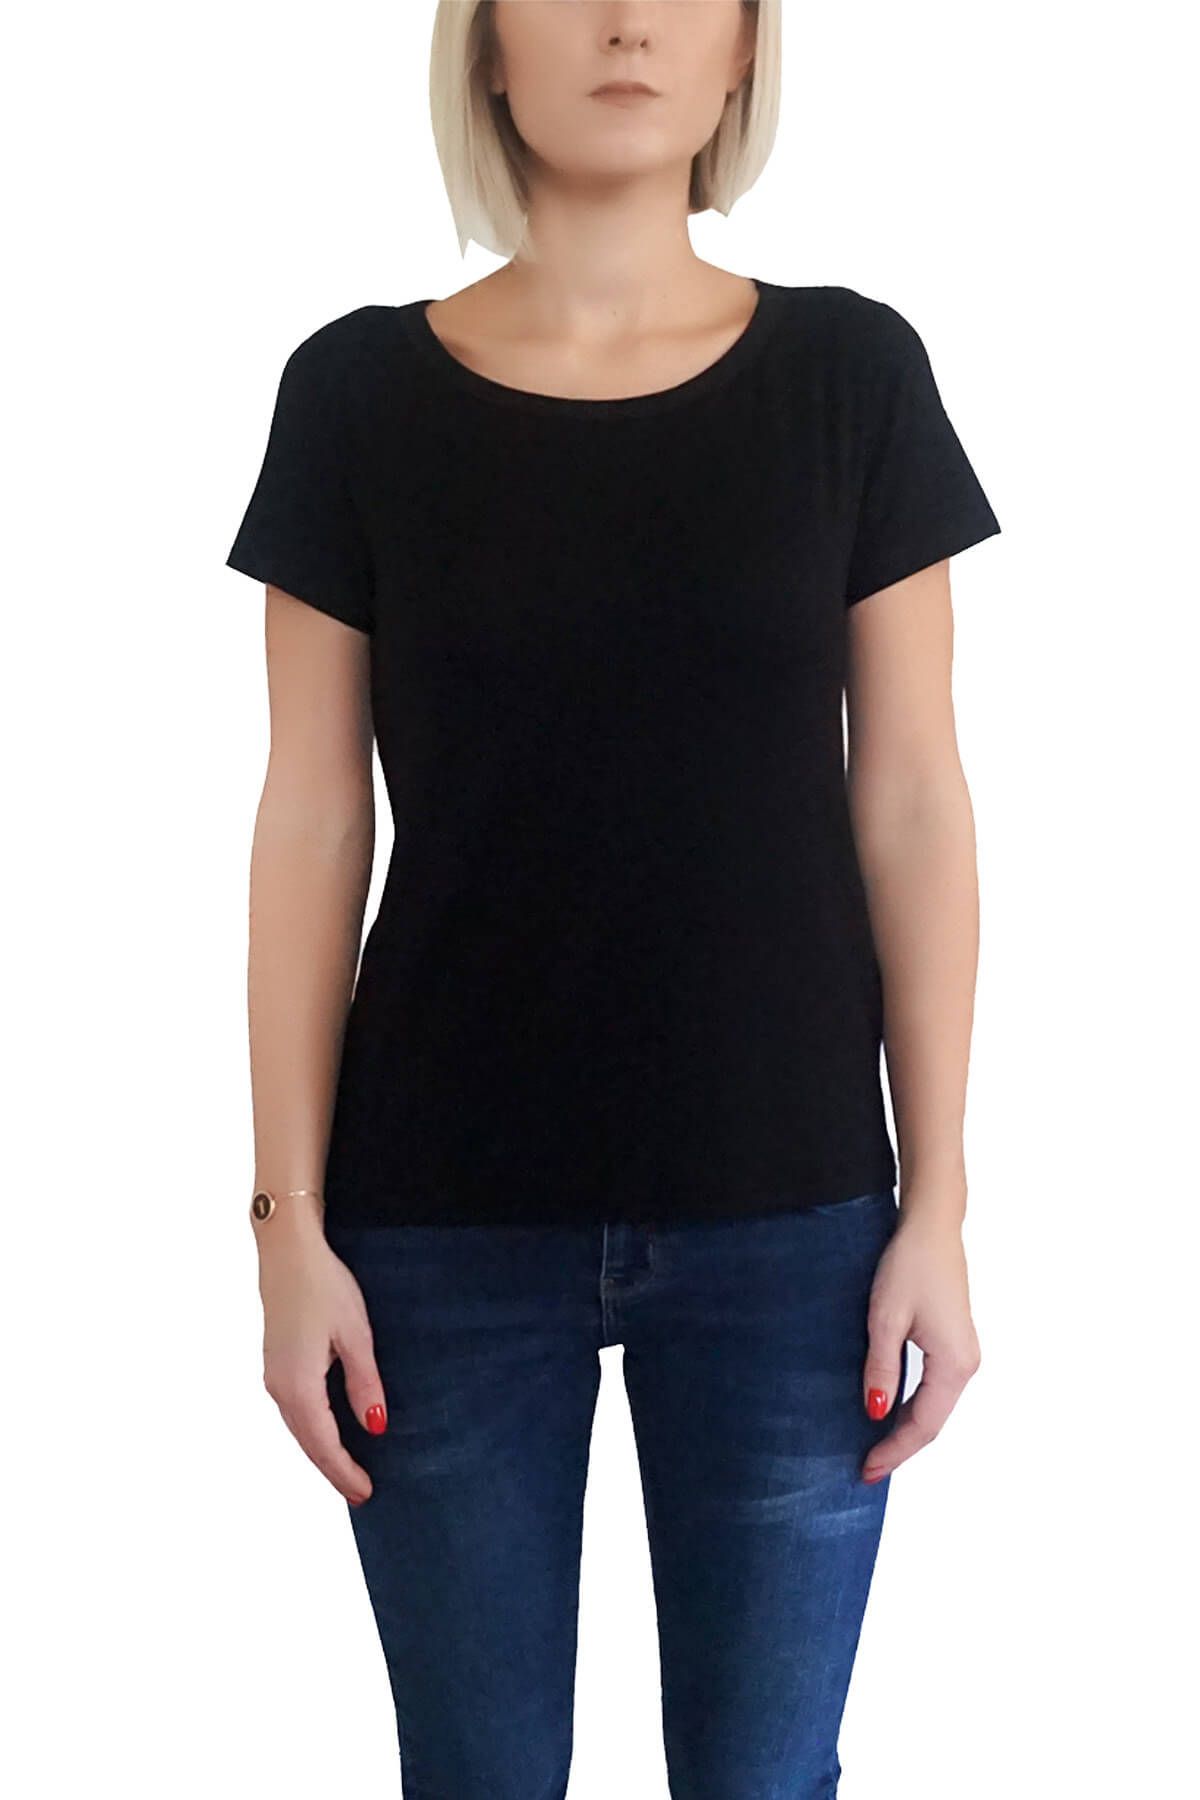 Mof Basics Kadın Siyah T-Shirt BYT-S